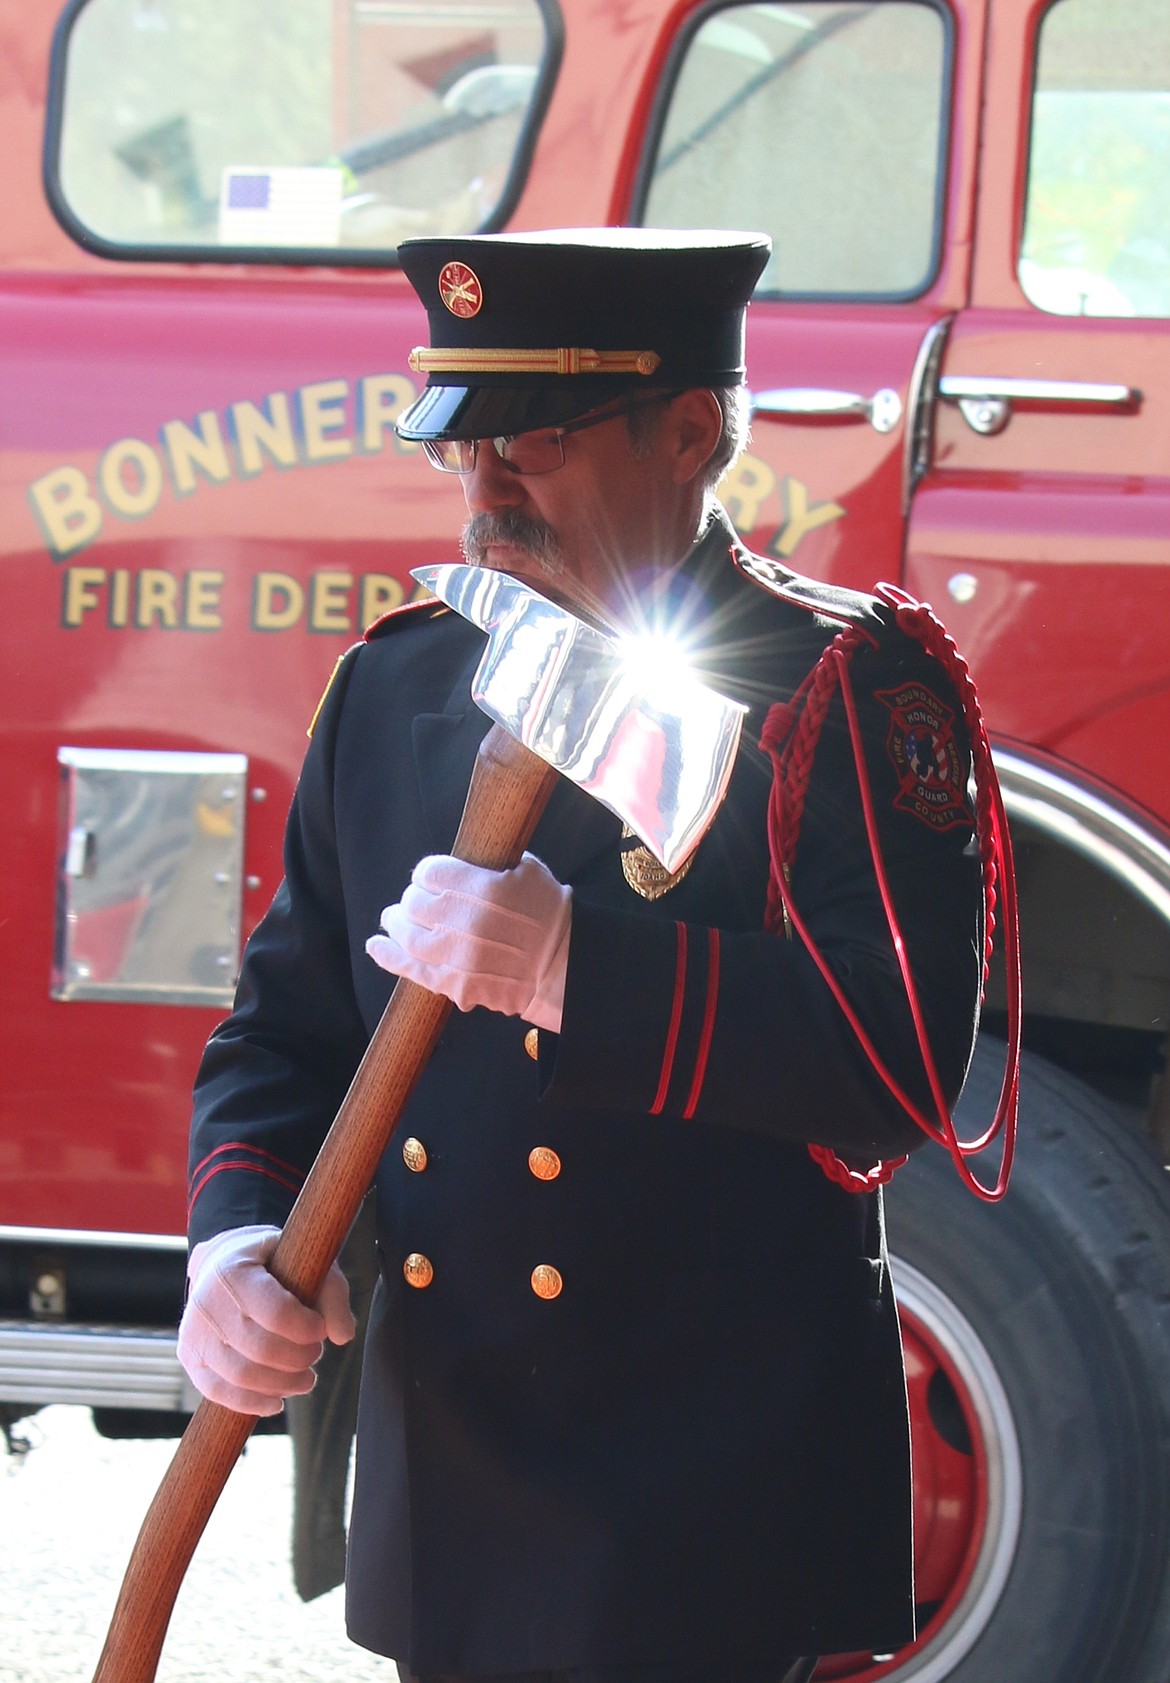 Photo by MANDI BATEMAN
Ken Baker, part of the Boundary County Fire Chiefs Association Honor Guard, during the Fallen Firefighter Memorial on Oct. 6.